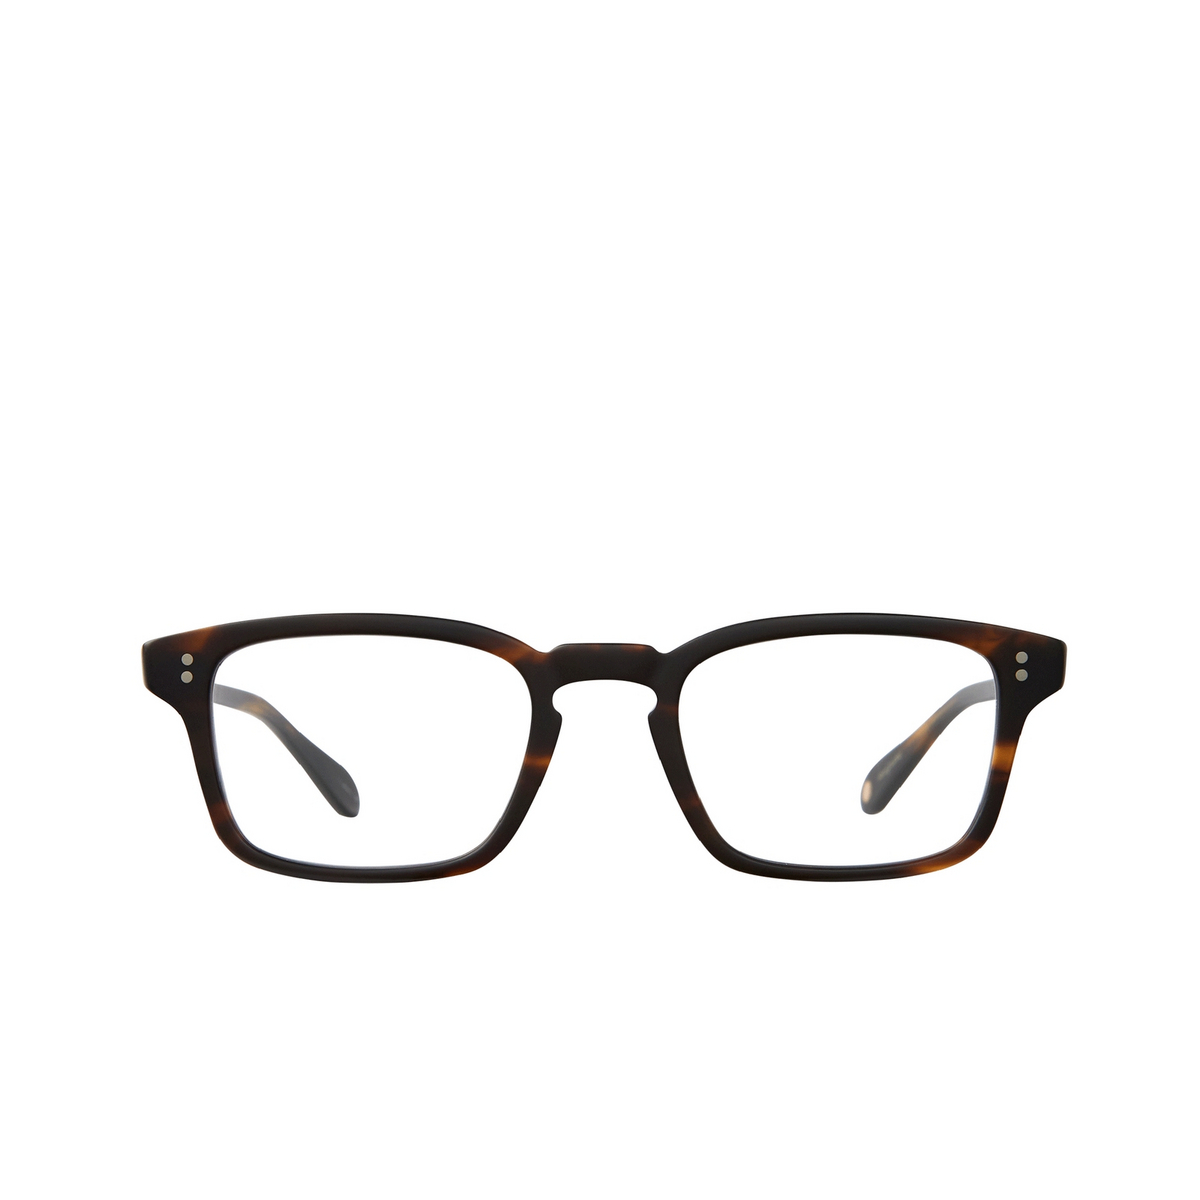 Garrett Leight DIMMICK Eyeglasses MCOFT Matte Coffee Tortoise - front view